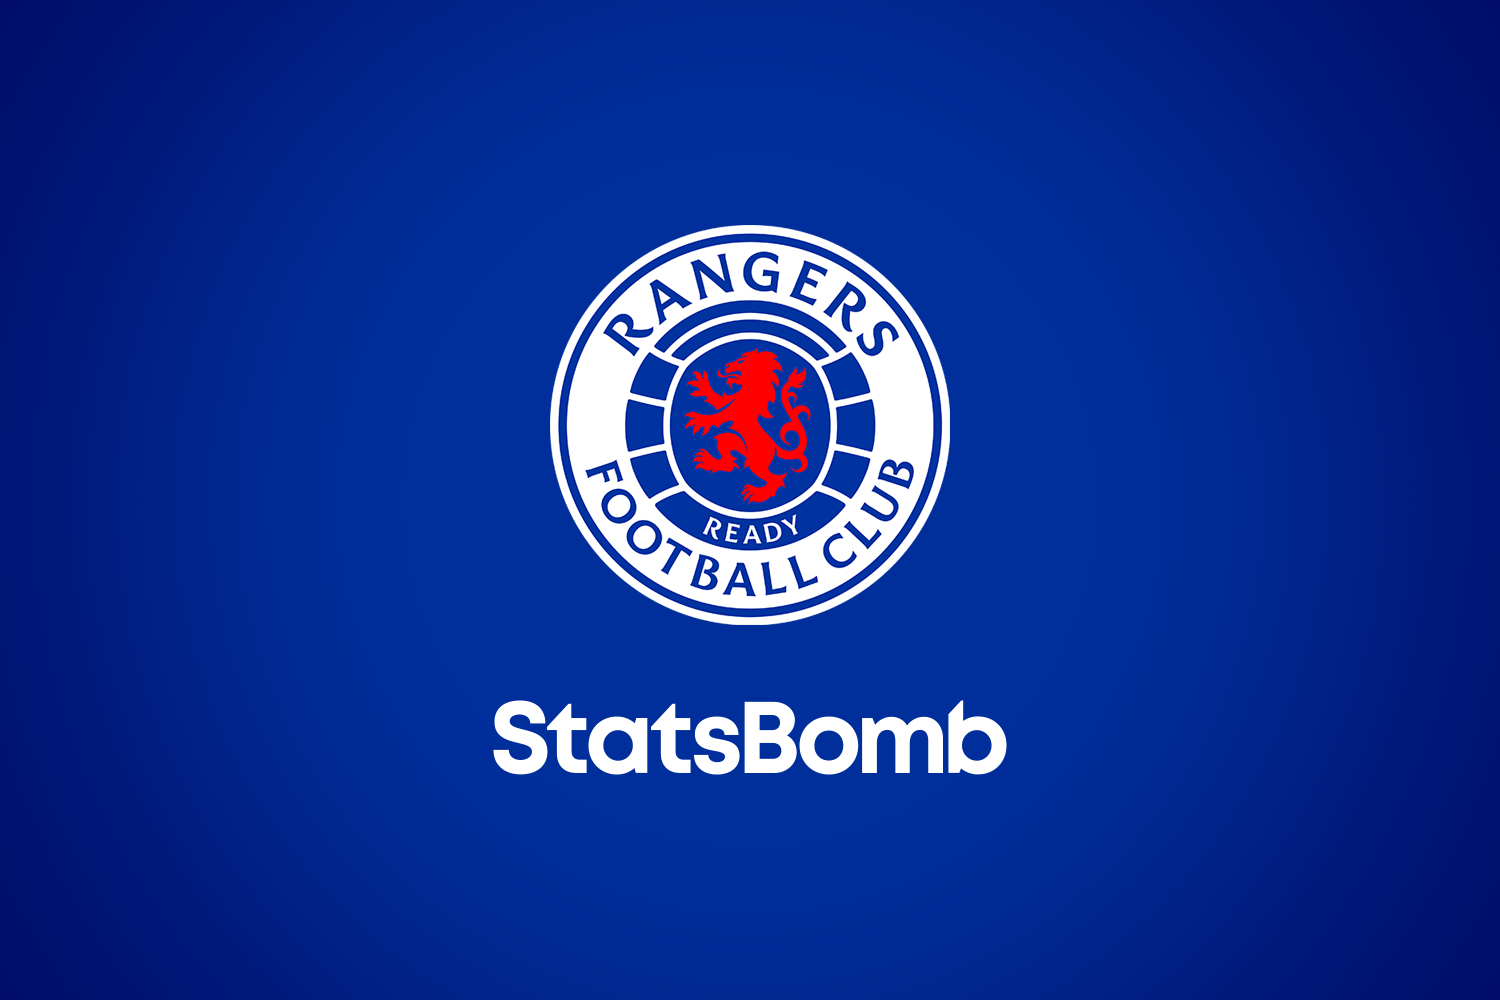 Rangers FC Agree Partnership With StatsBomb